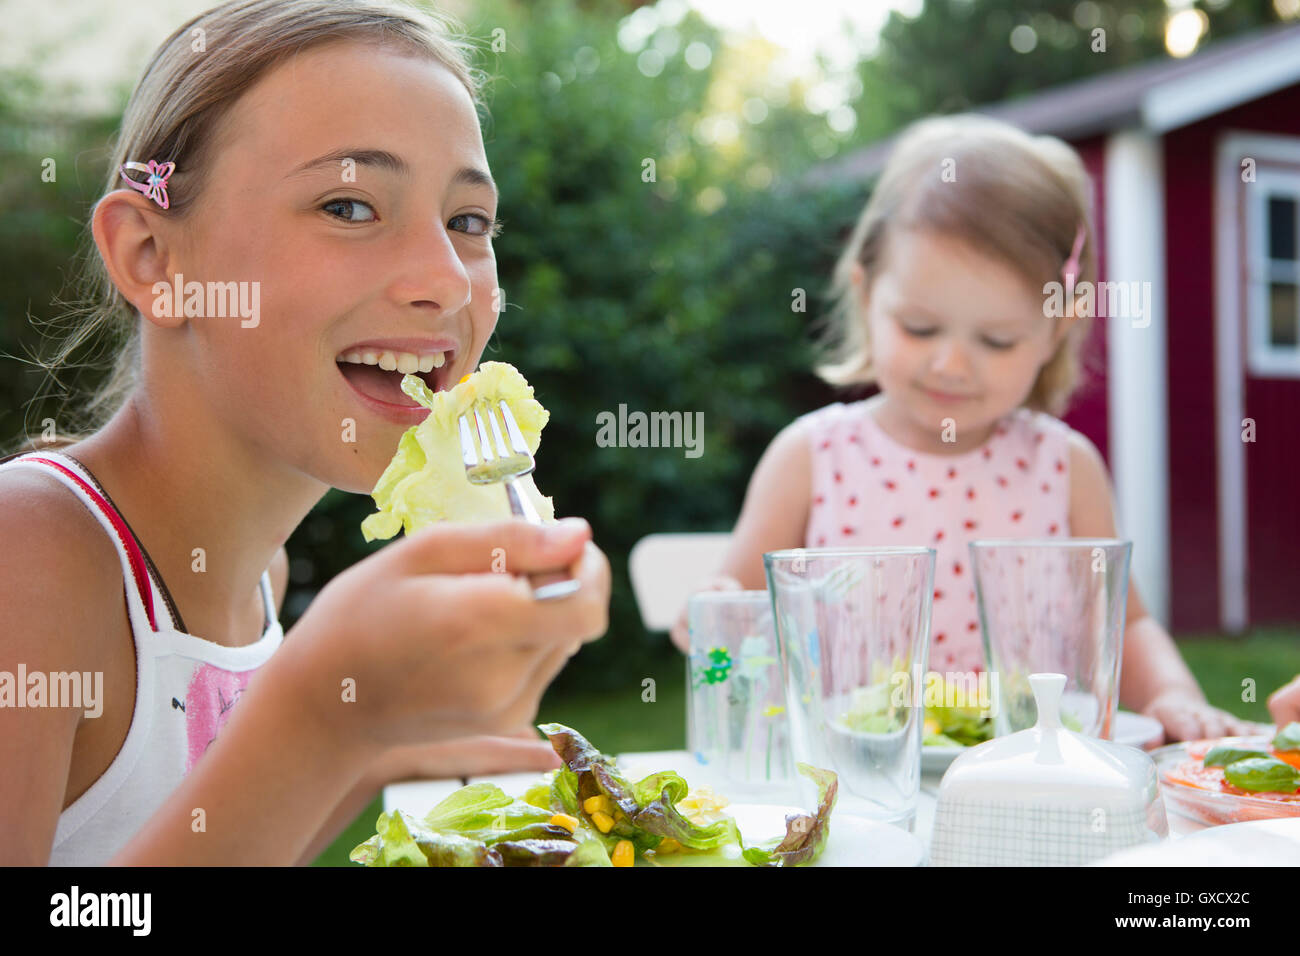 Portrait of girl eating salad in garden, Bavaria, Germany Stock Photo